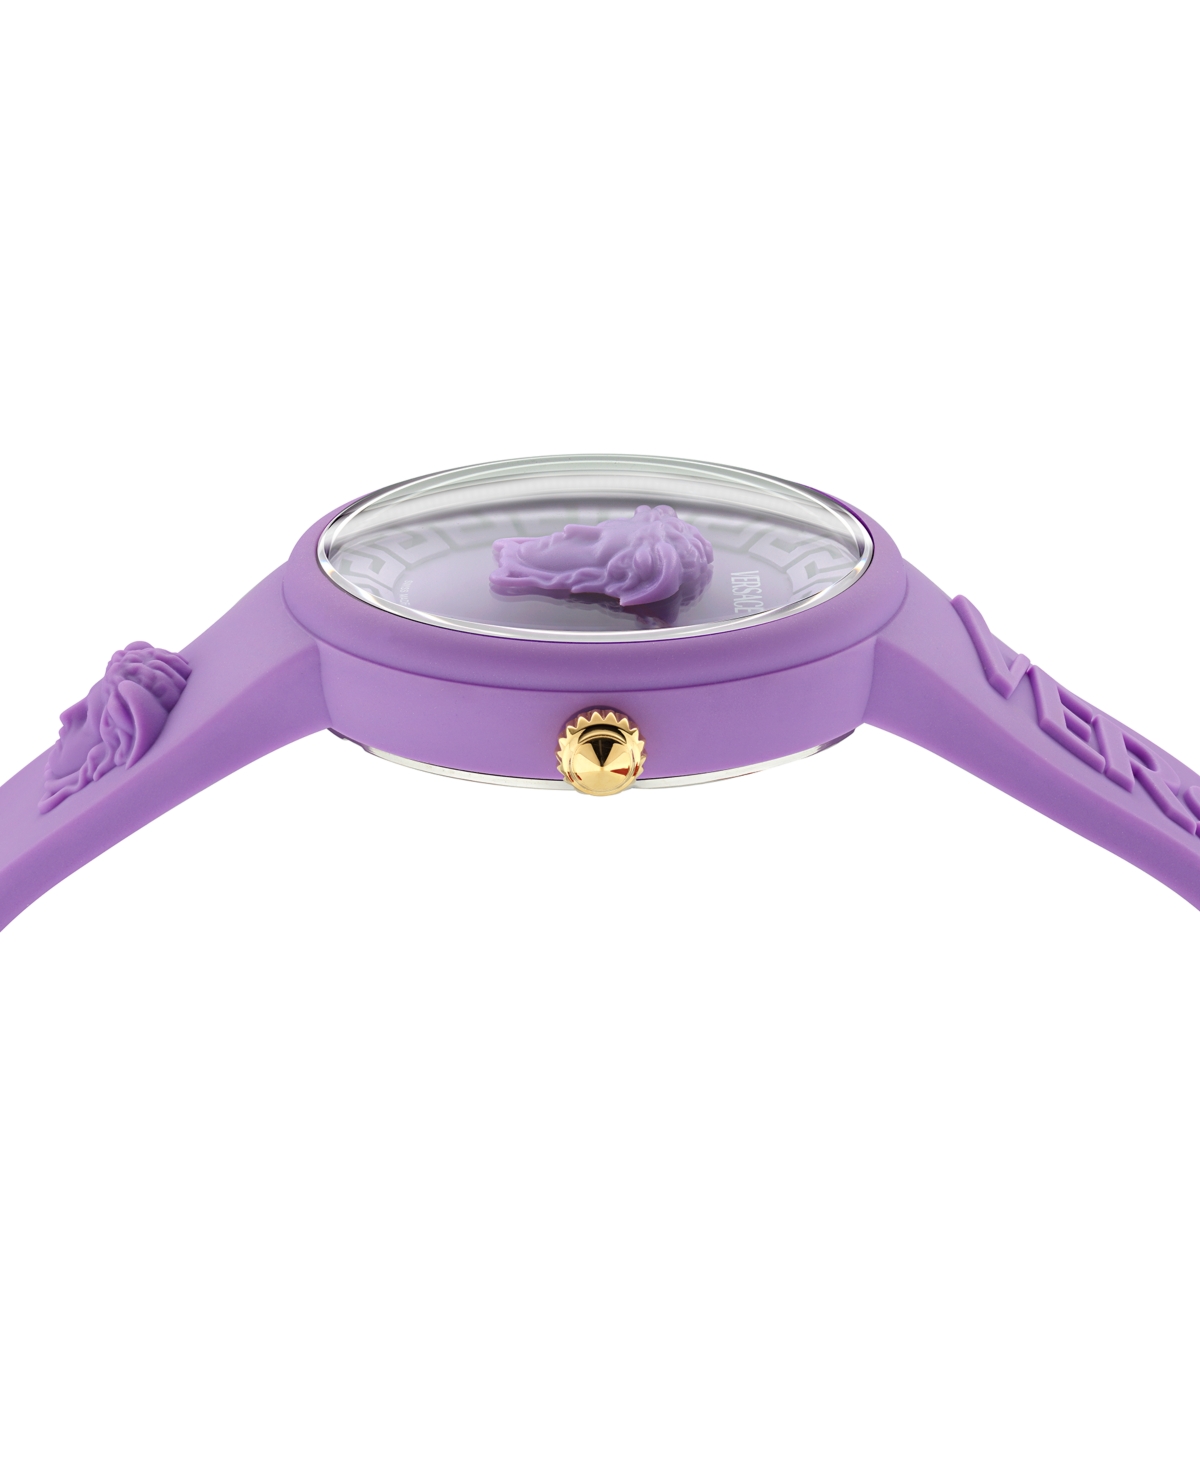 Shop Versace Women's Swiss Purple Silicone Strap Watch 38mm